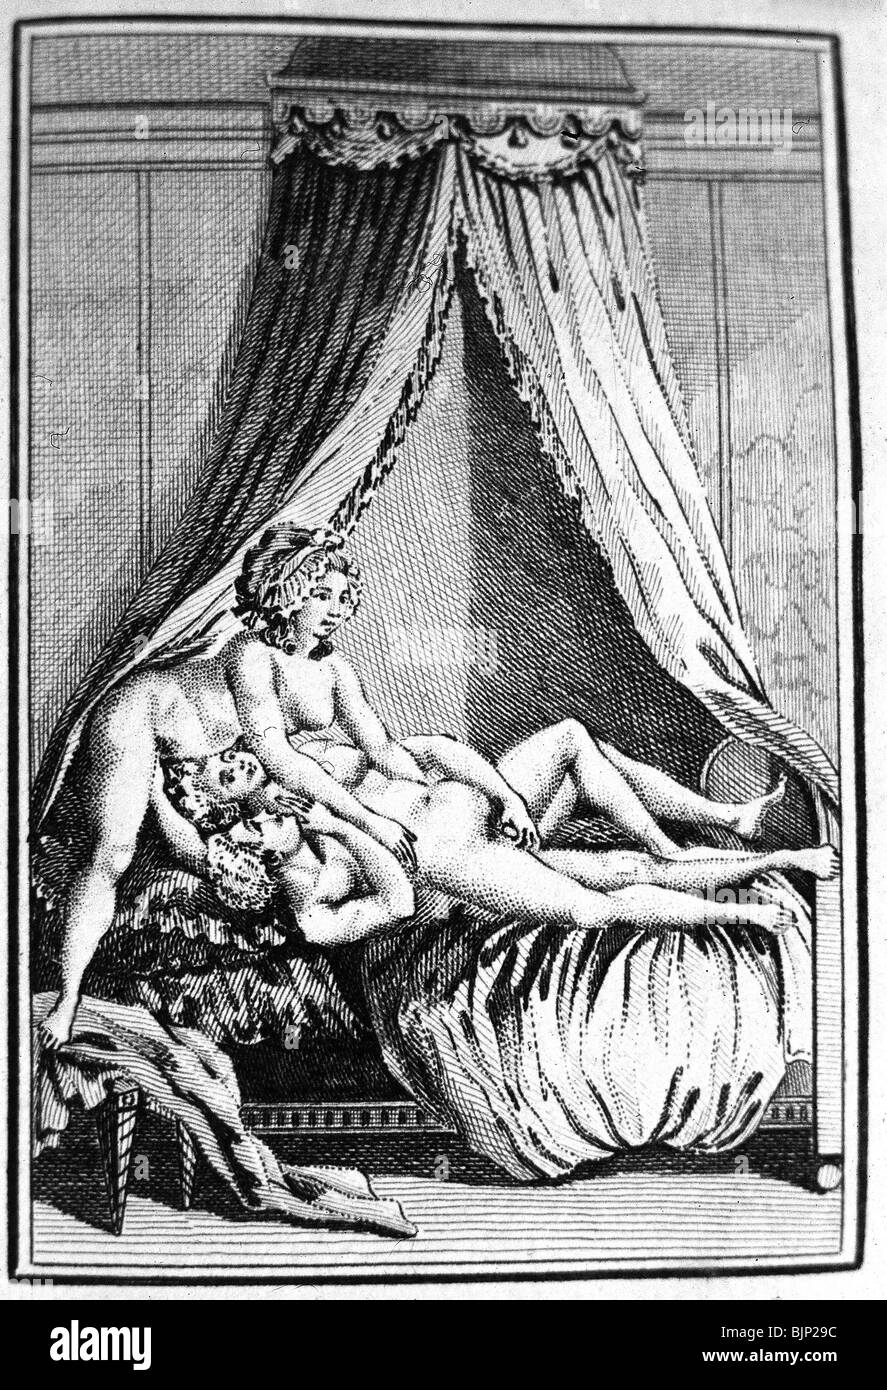 Erotismo, treesome sexo, escena con un hombre y dos mujeres, cobre grabado de le Libertin de Fotografía de stock